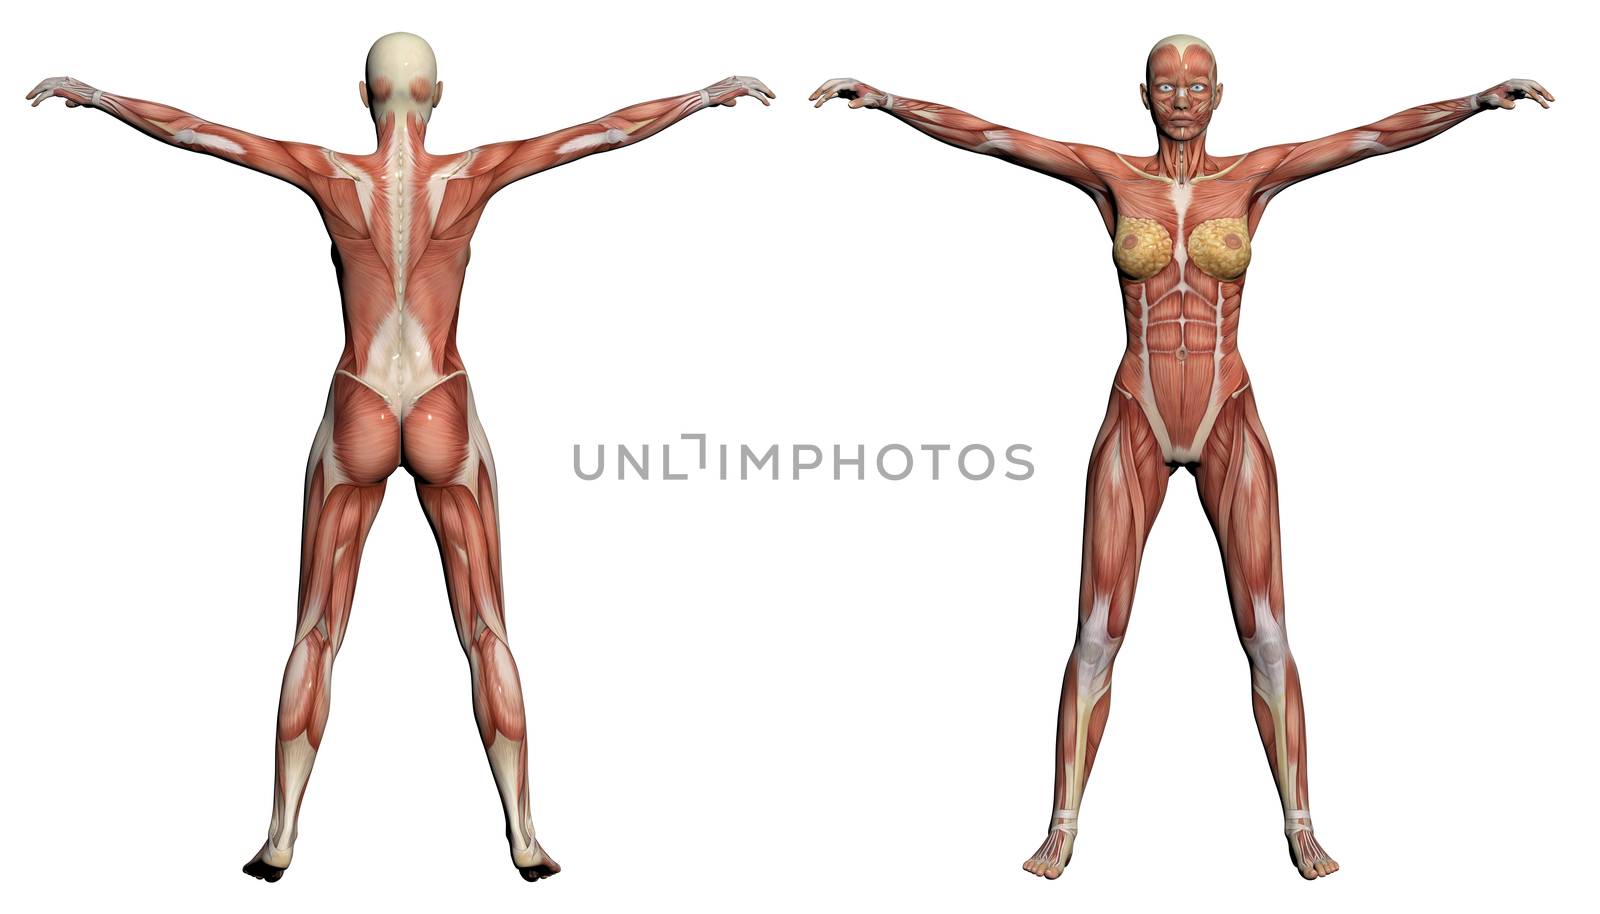 Human Anatomy - Female Muscles by vitanovski